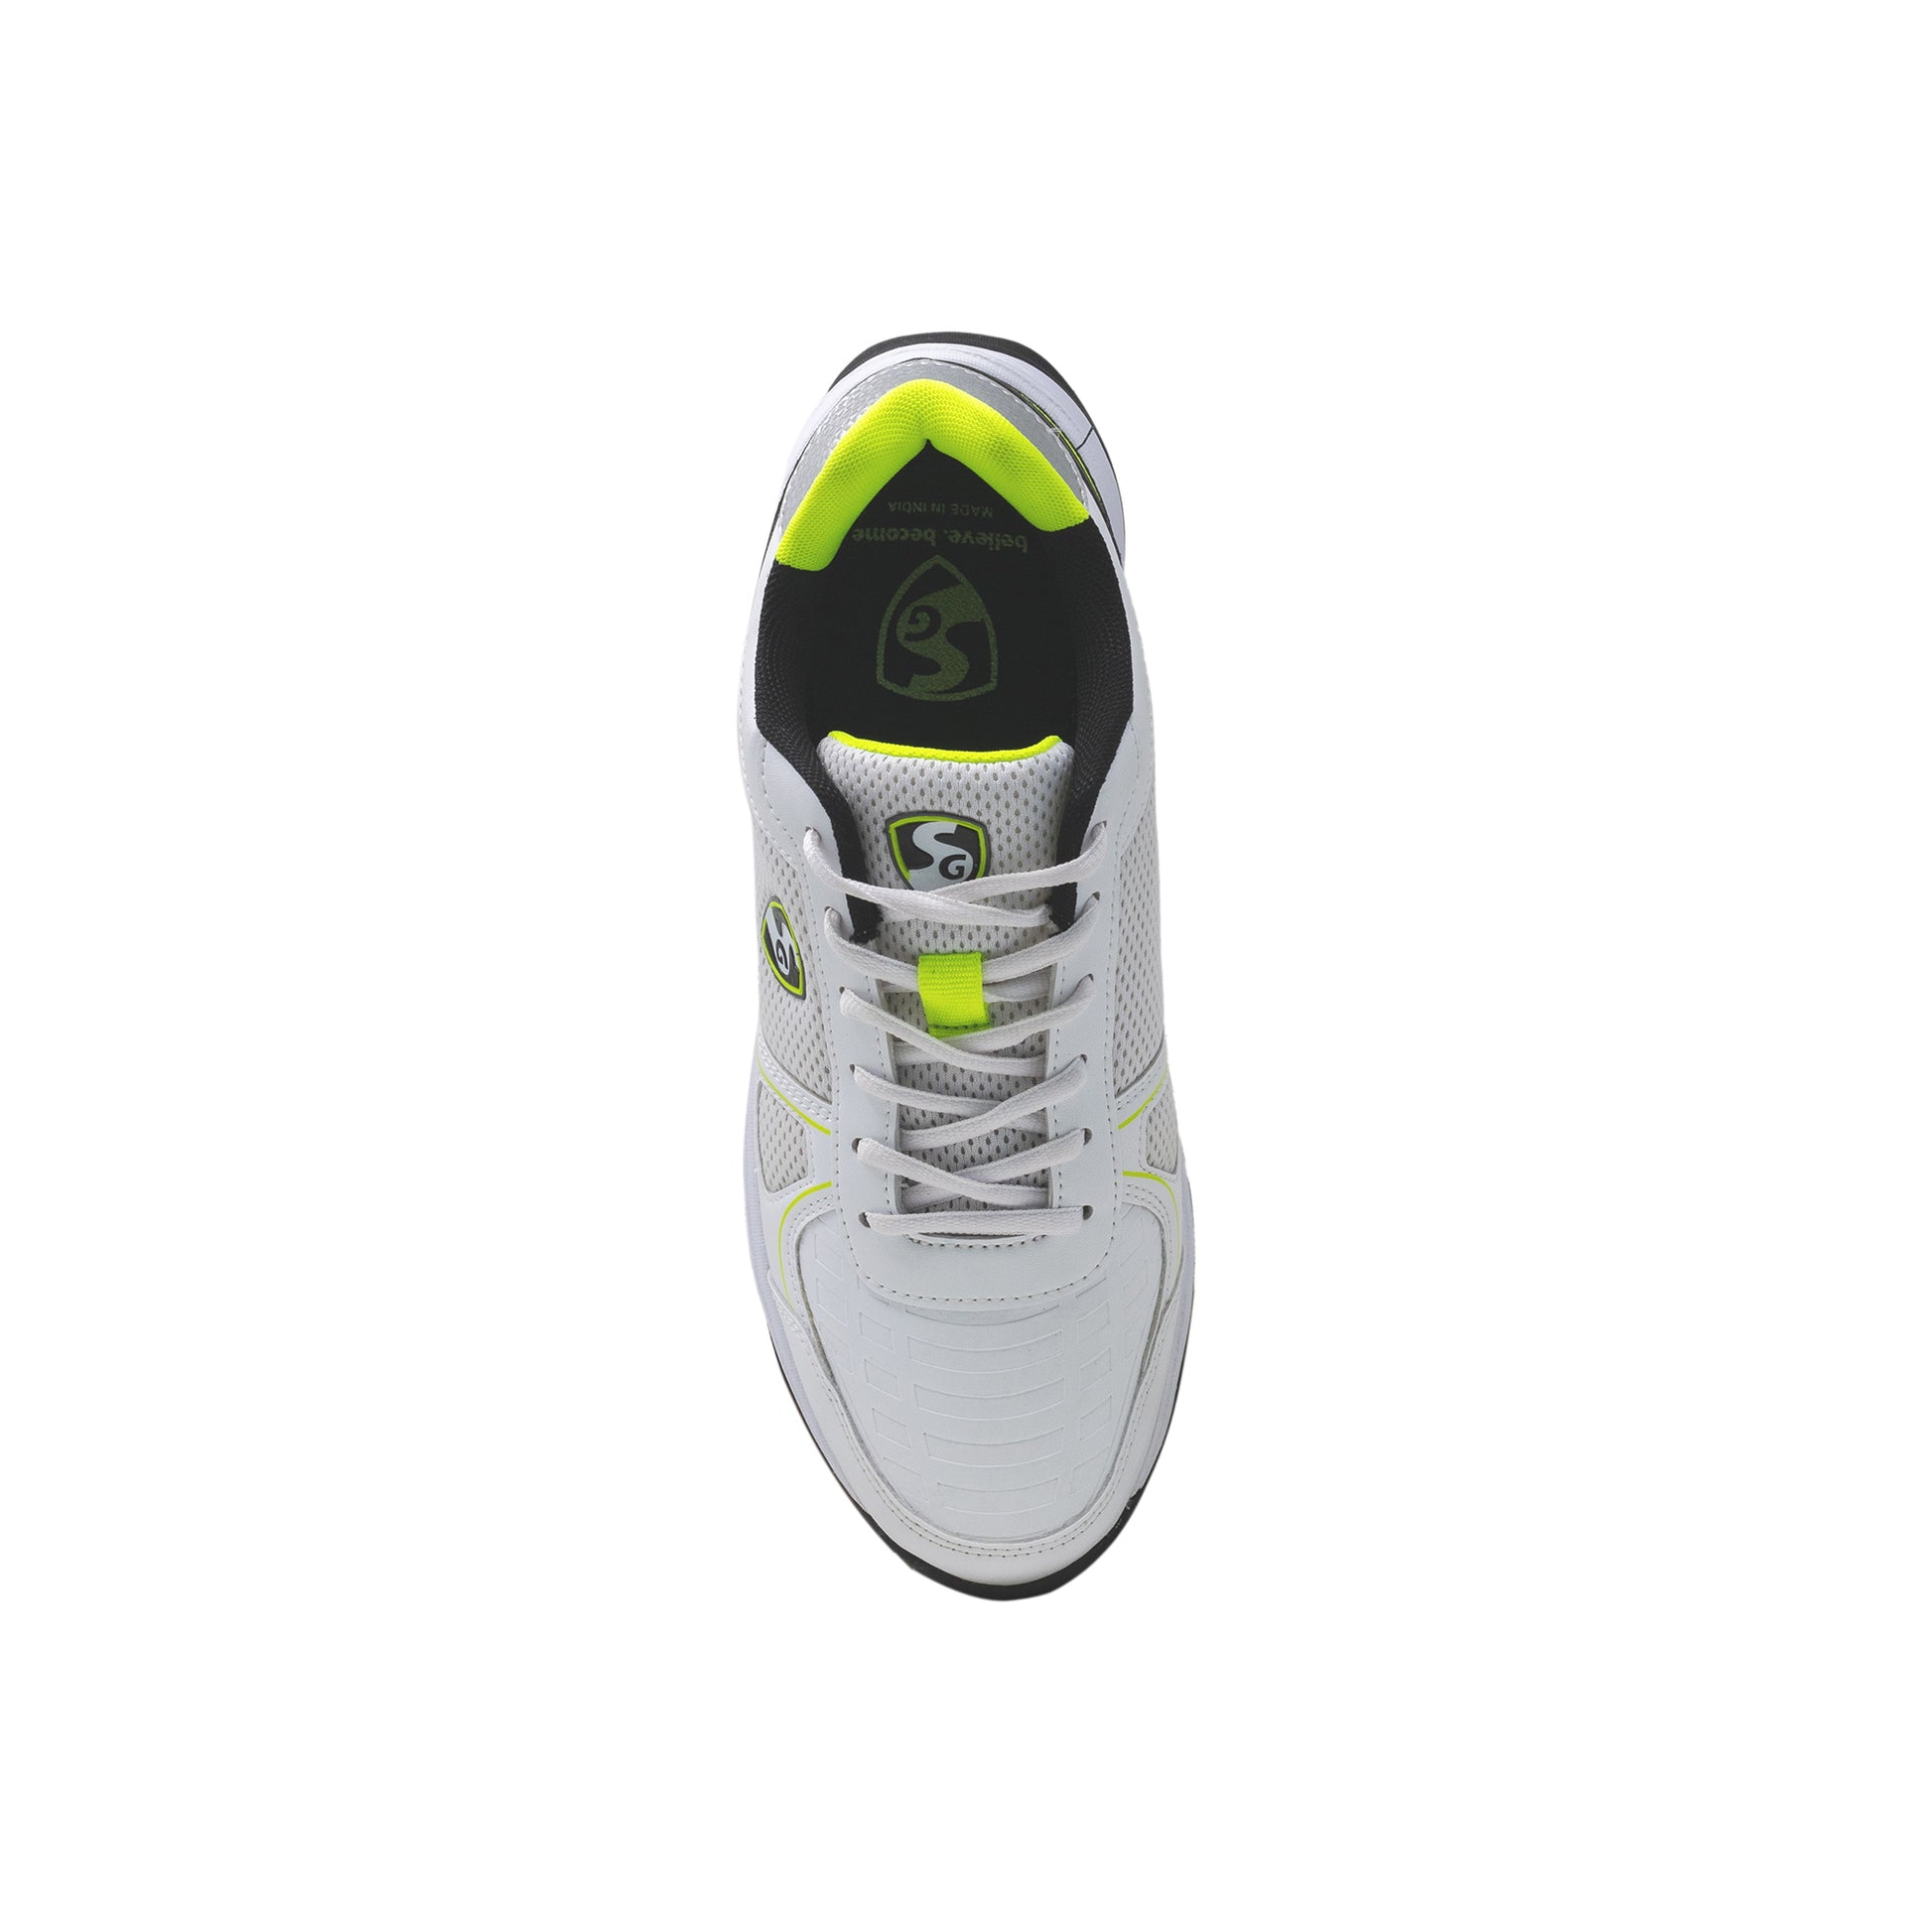 SG SCORER 6.0 Sports Shoe Design for Performance on the Field - White/Black/Lime